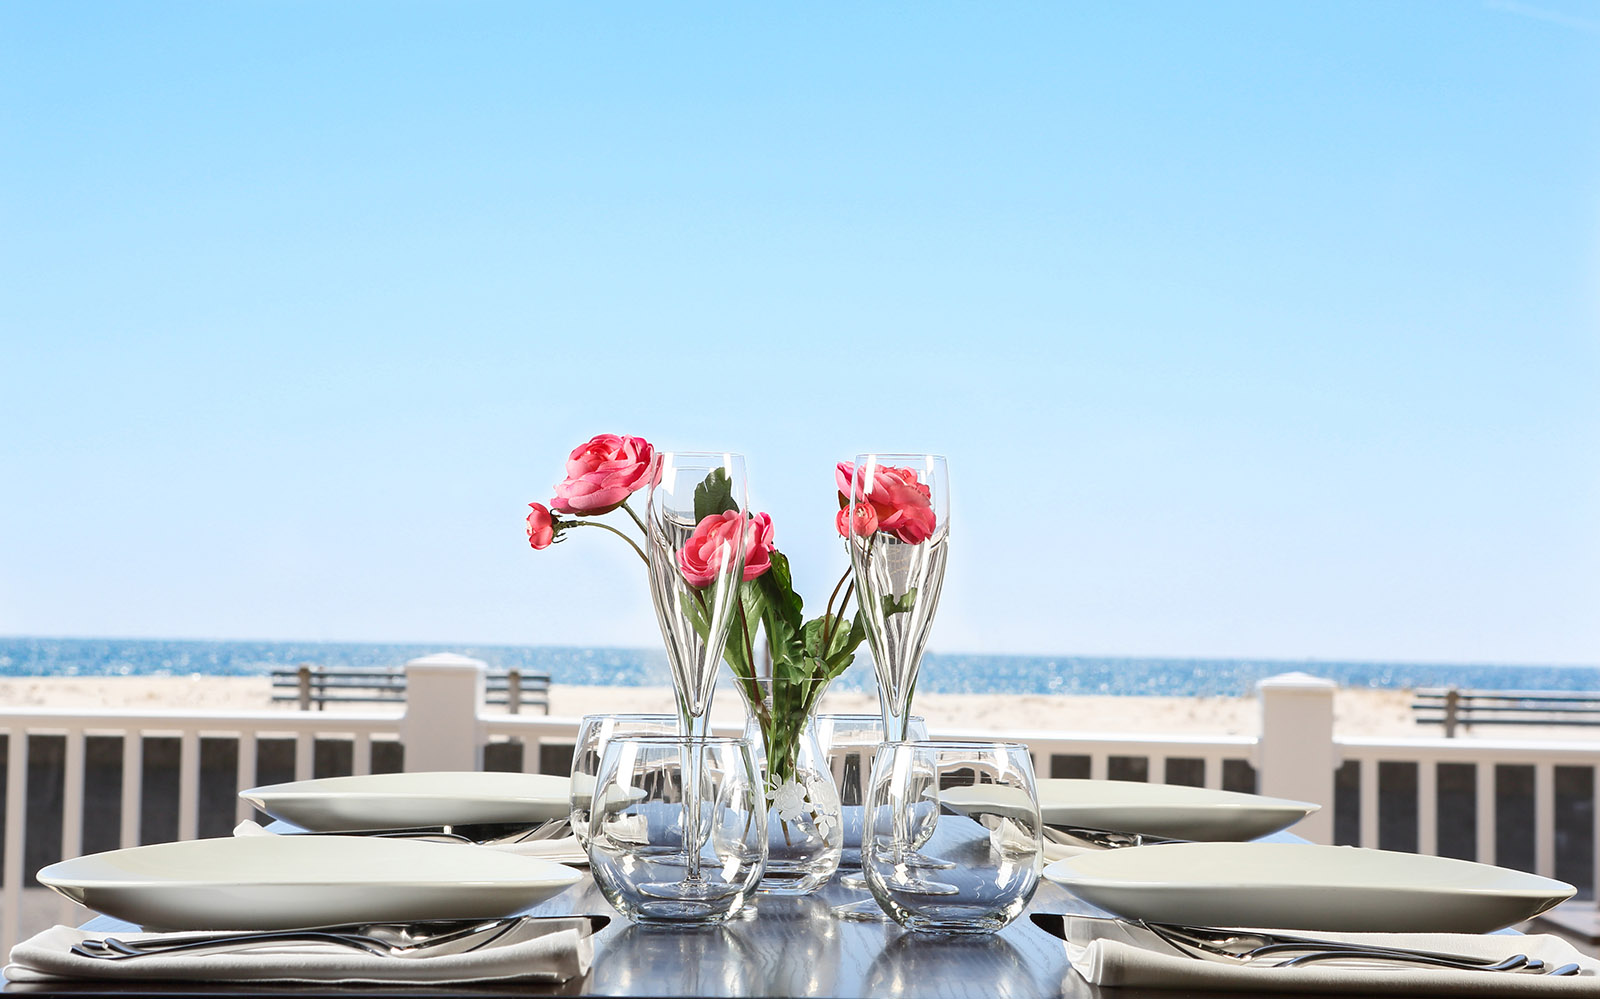 Cape May Ocean Club restaurant deck